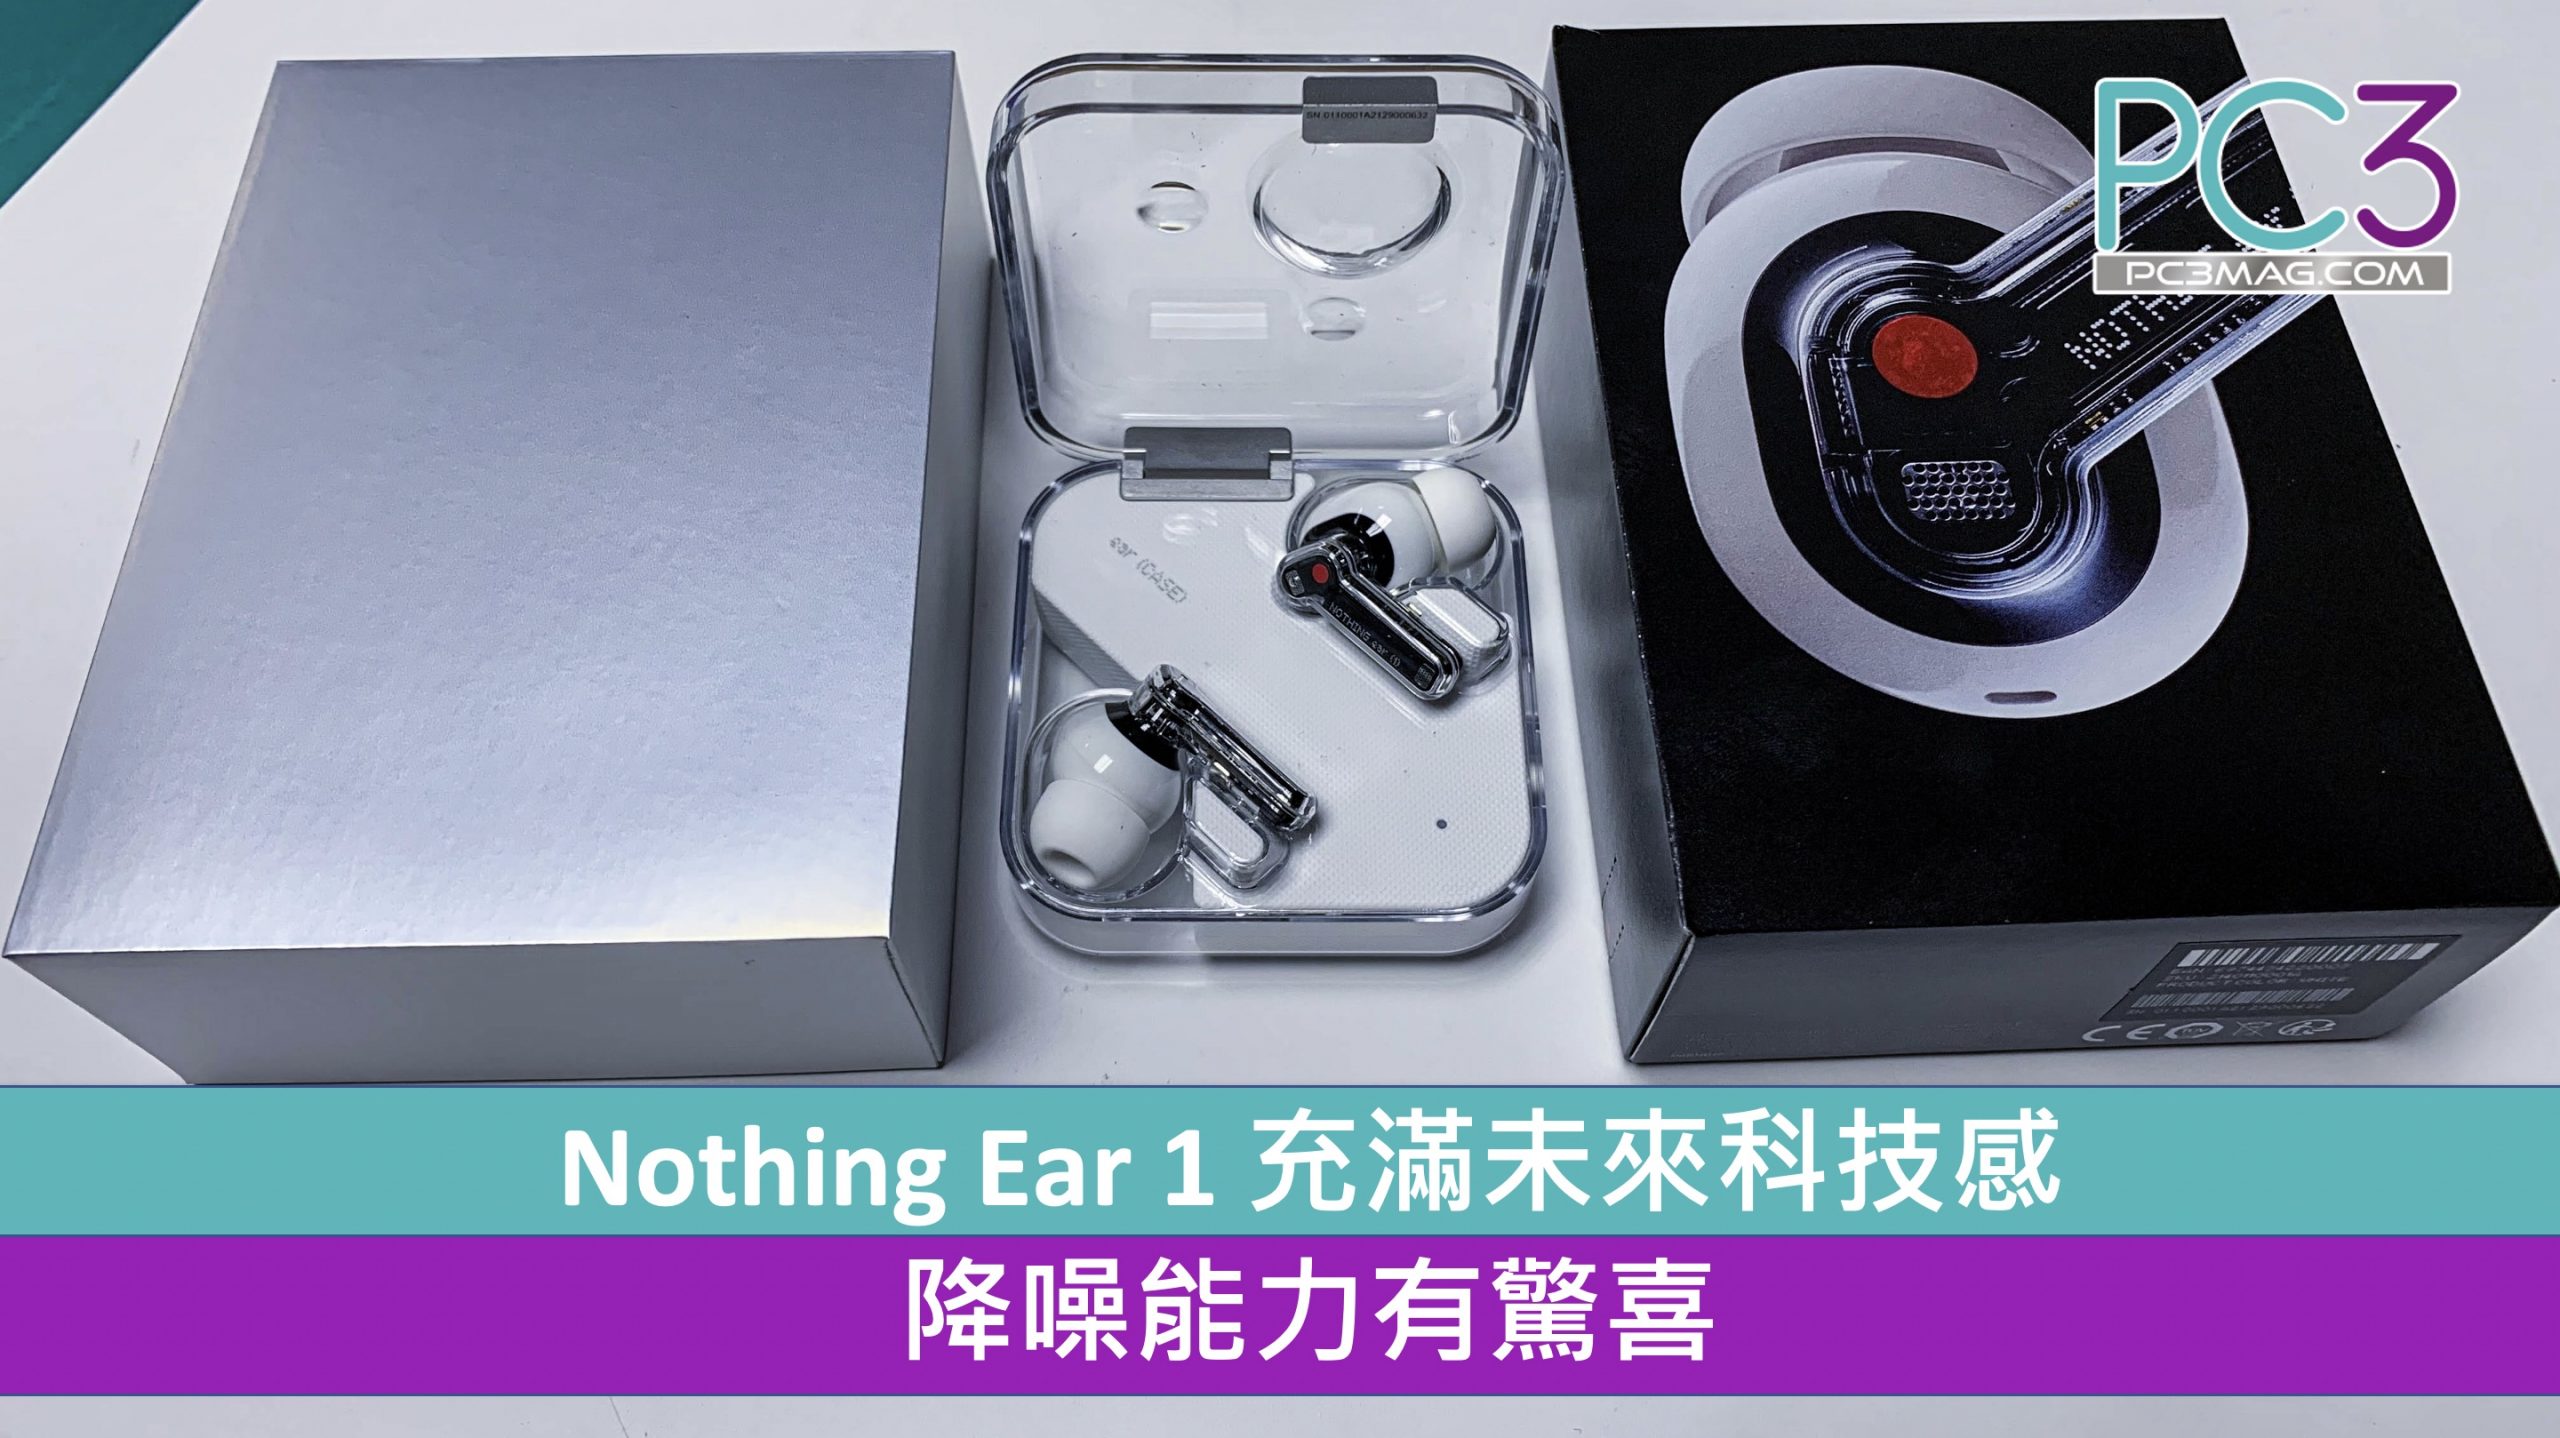 Nothing Ear 1 充滿未來科技感降噪能力有驚喜– PC3 Magazine